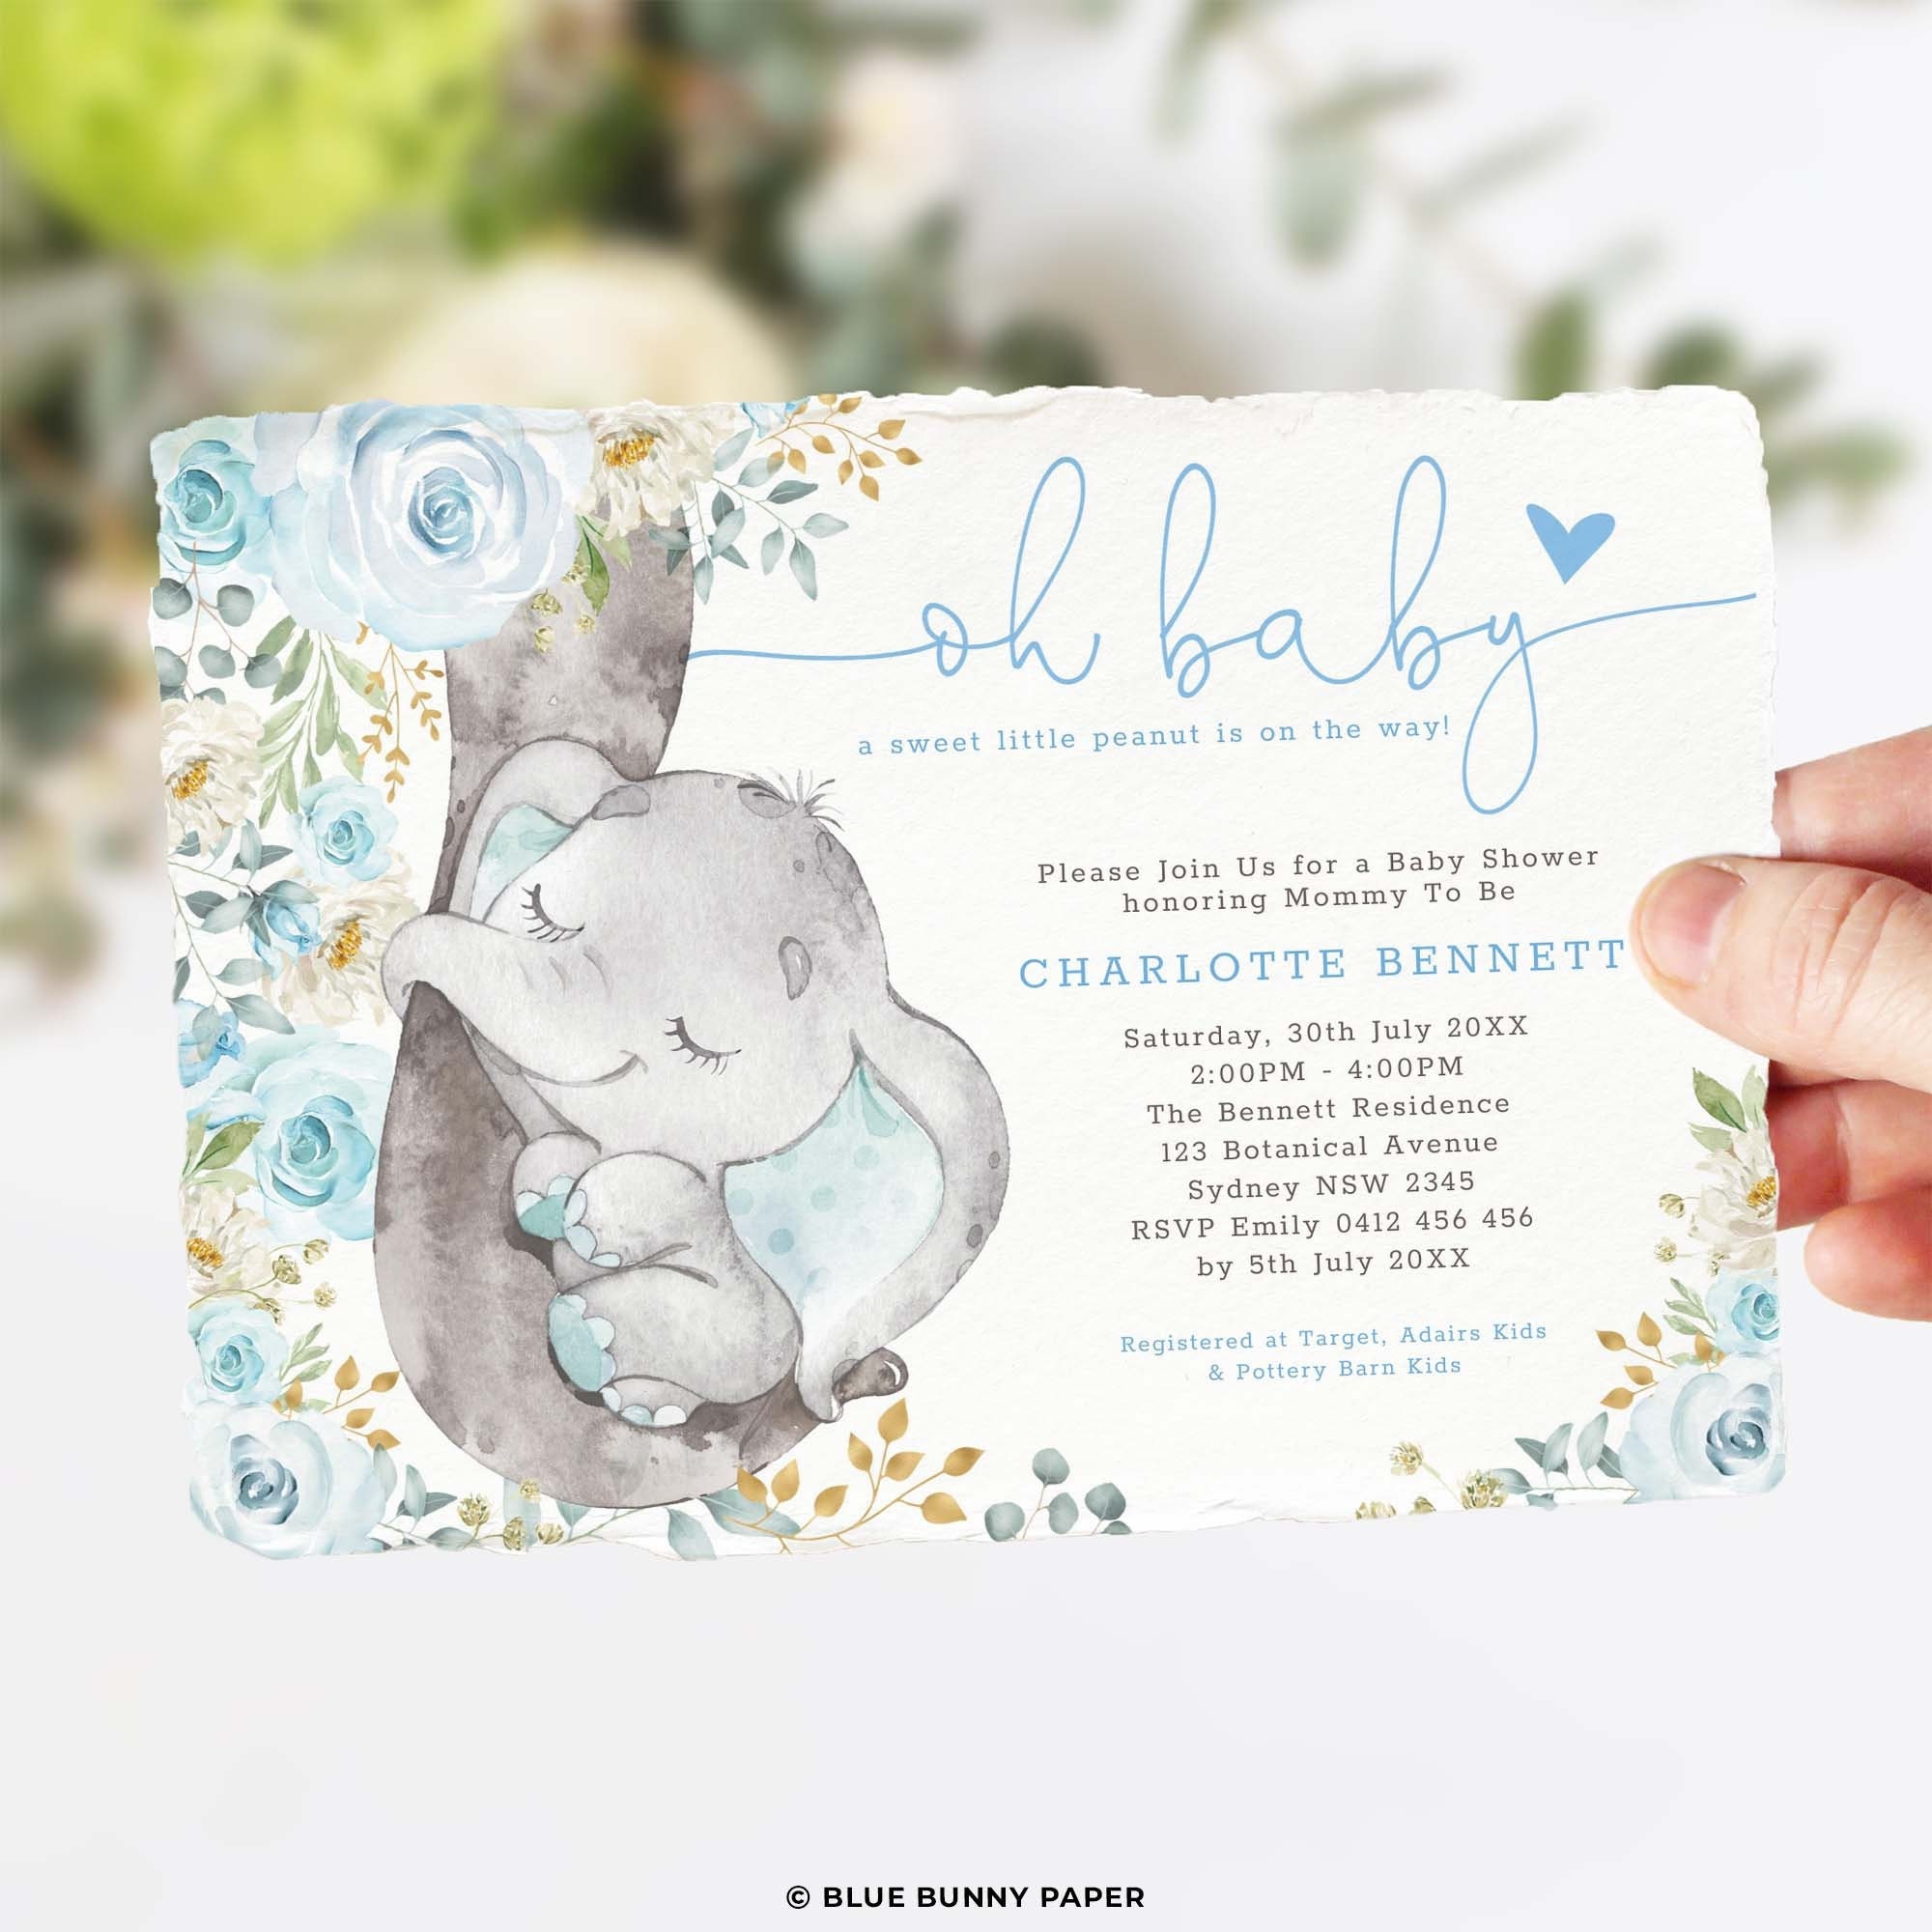 EDITABLE Its A Boy Baby Invitation - Blue Elephants Baby